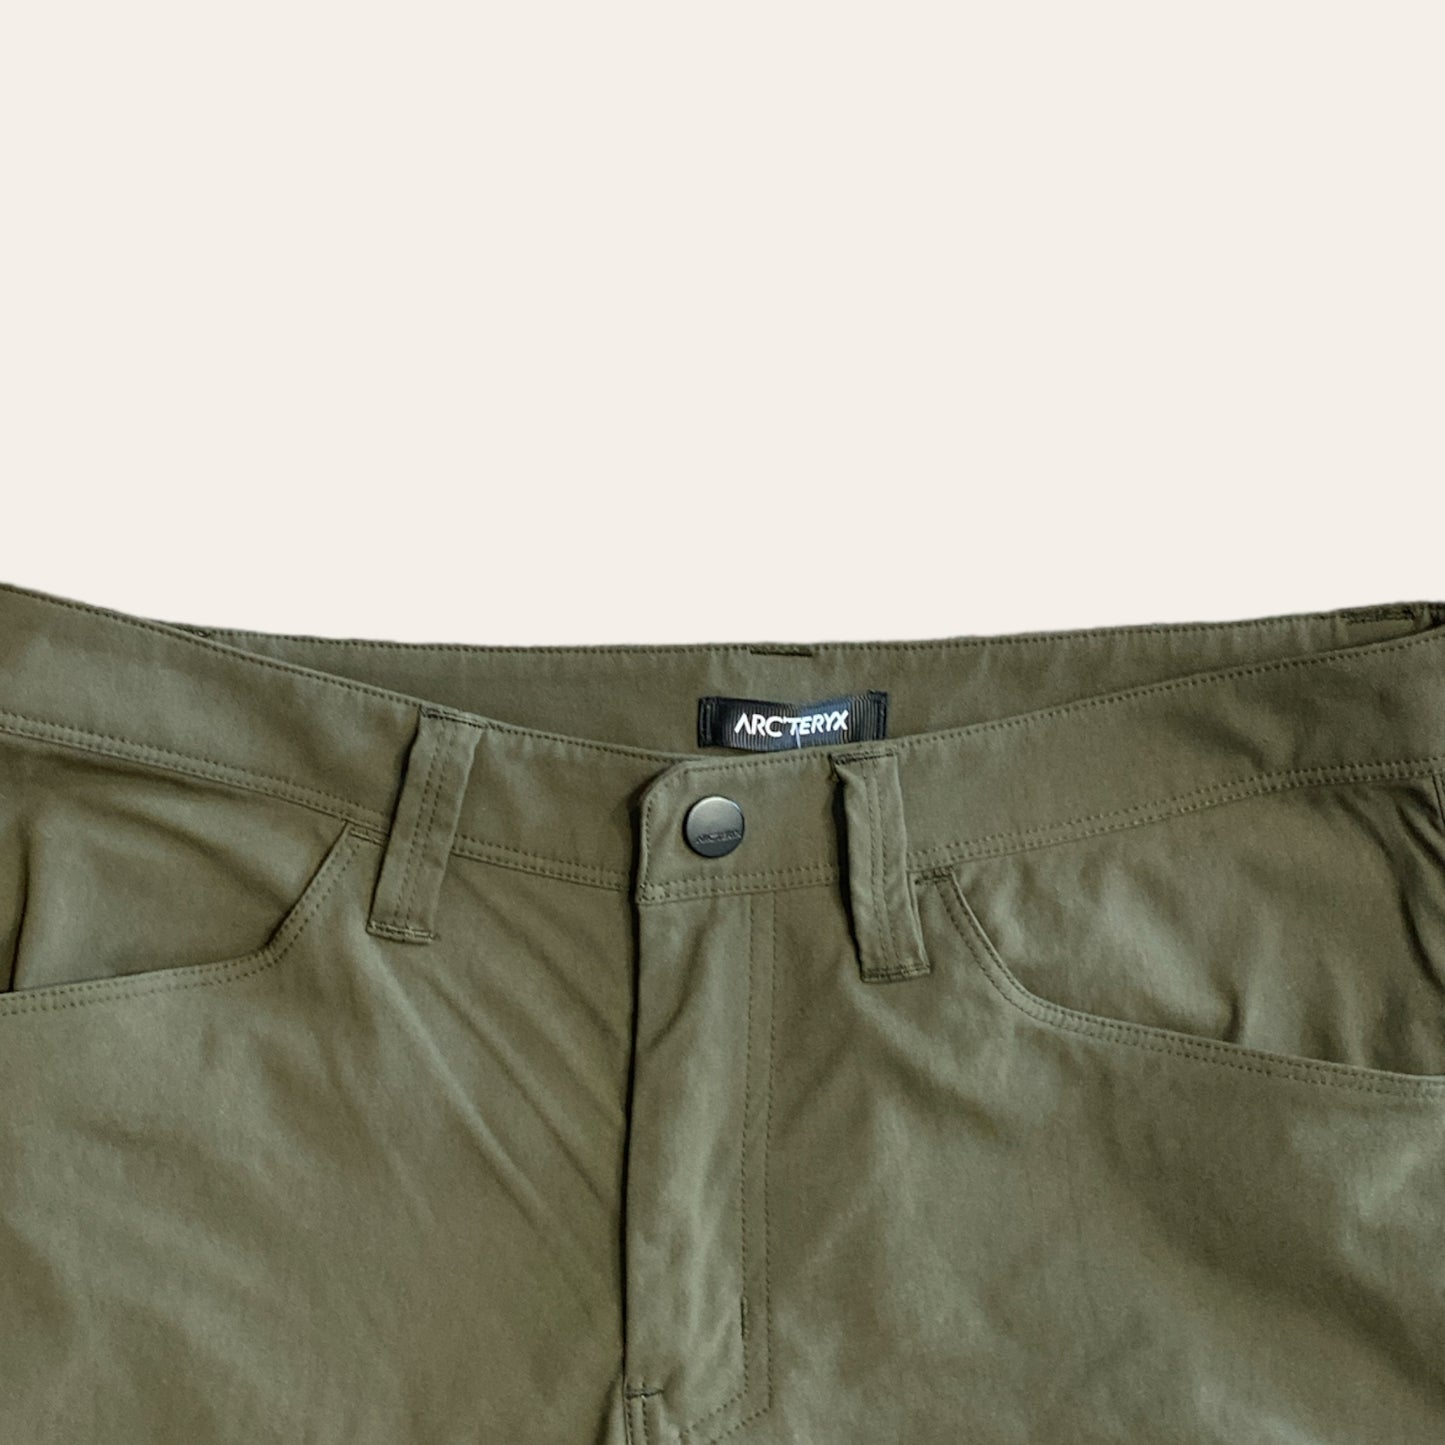 Arc'terx Pants Olive Size 30"